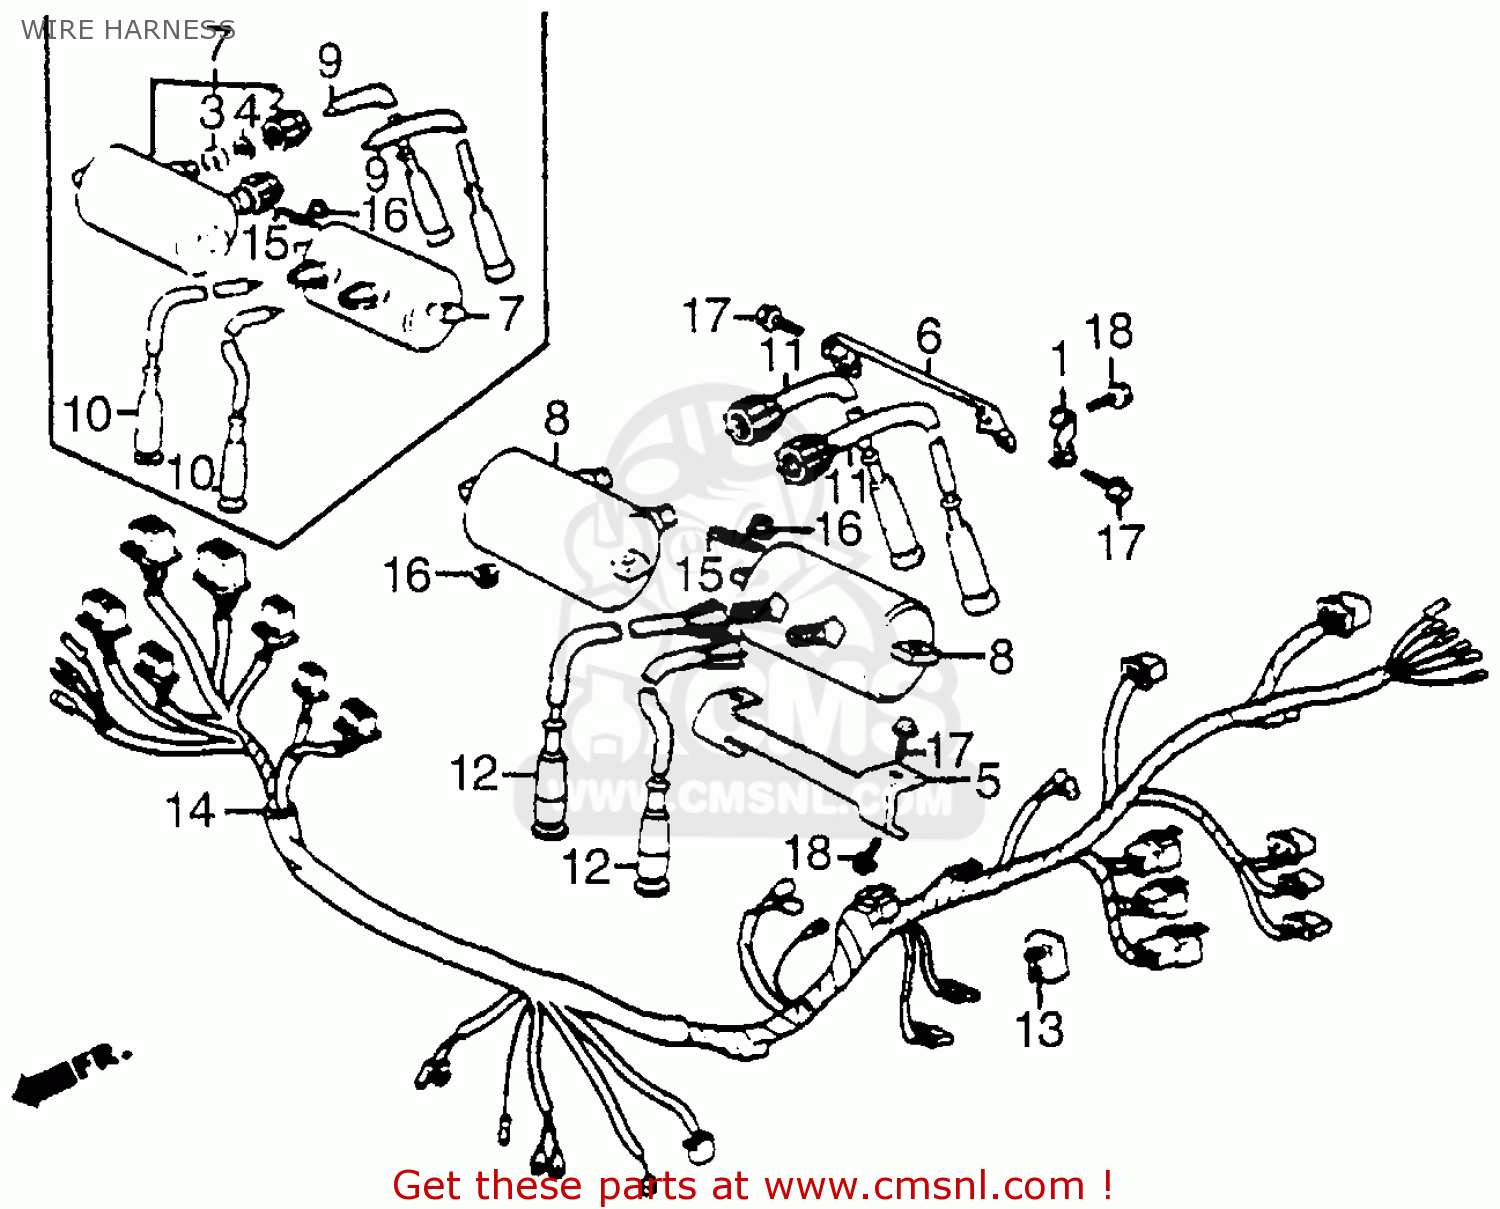 1984 Honda v30 magna wiring diagram #1